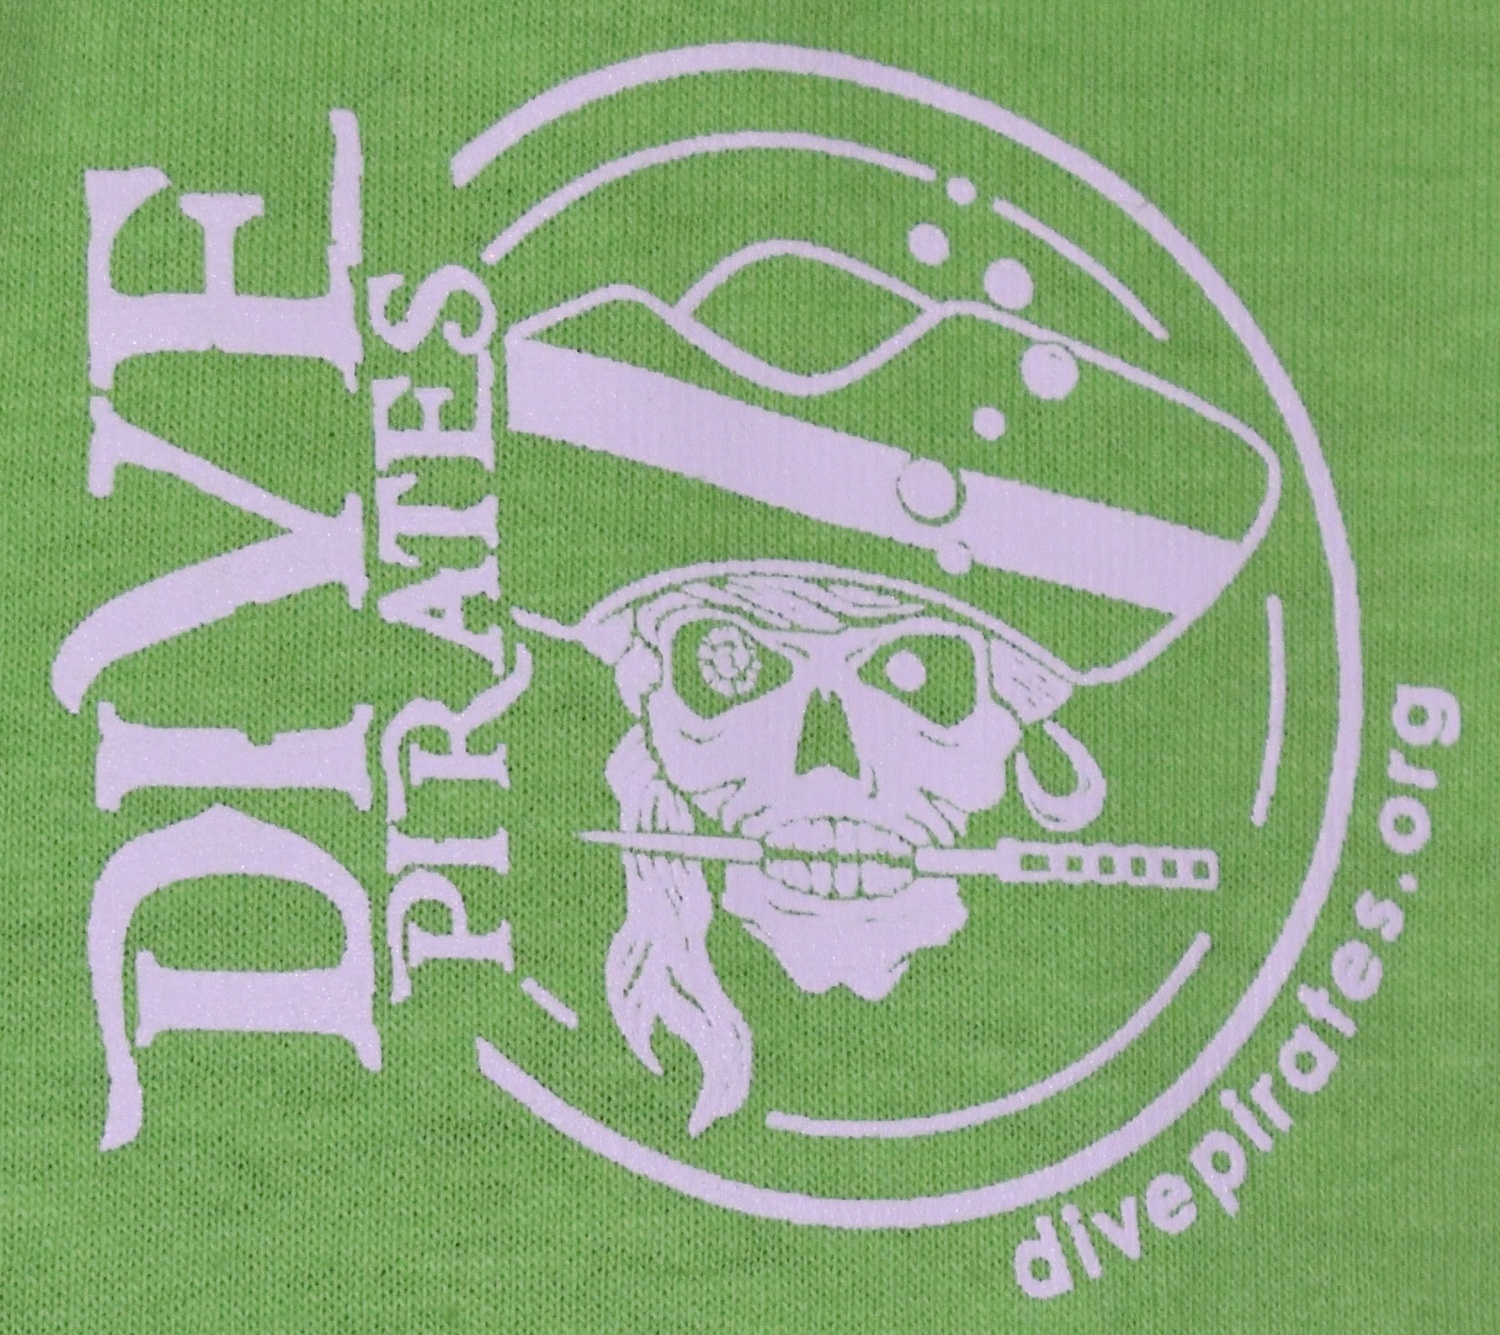 Men's Kraken T-shirt 100% cotton - Dive Pirates Foundation